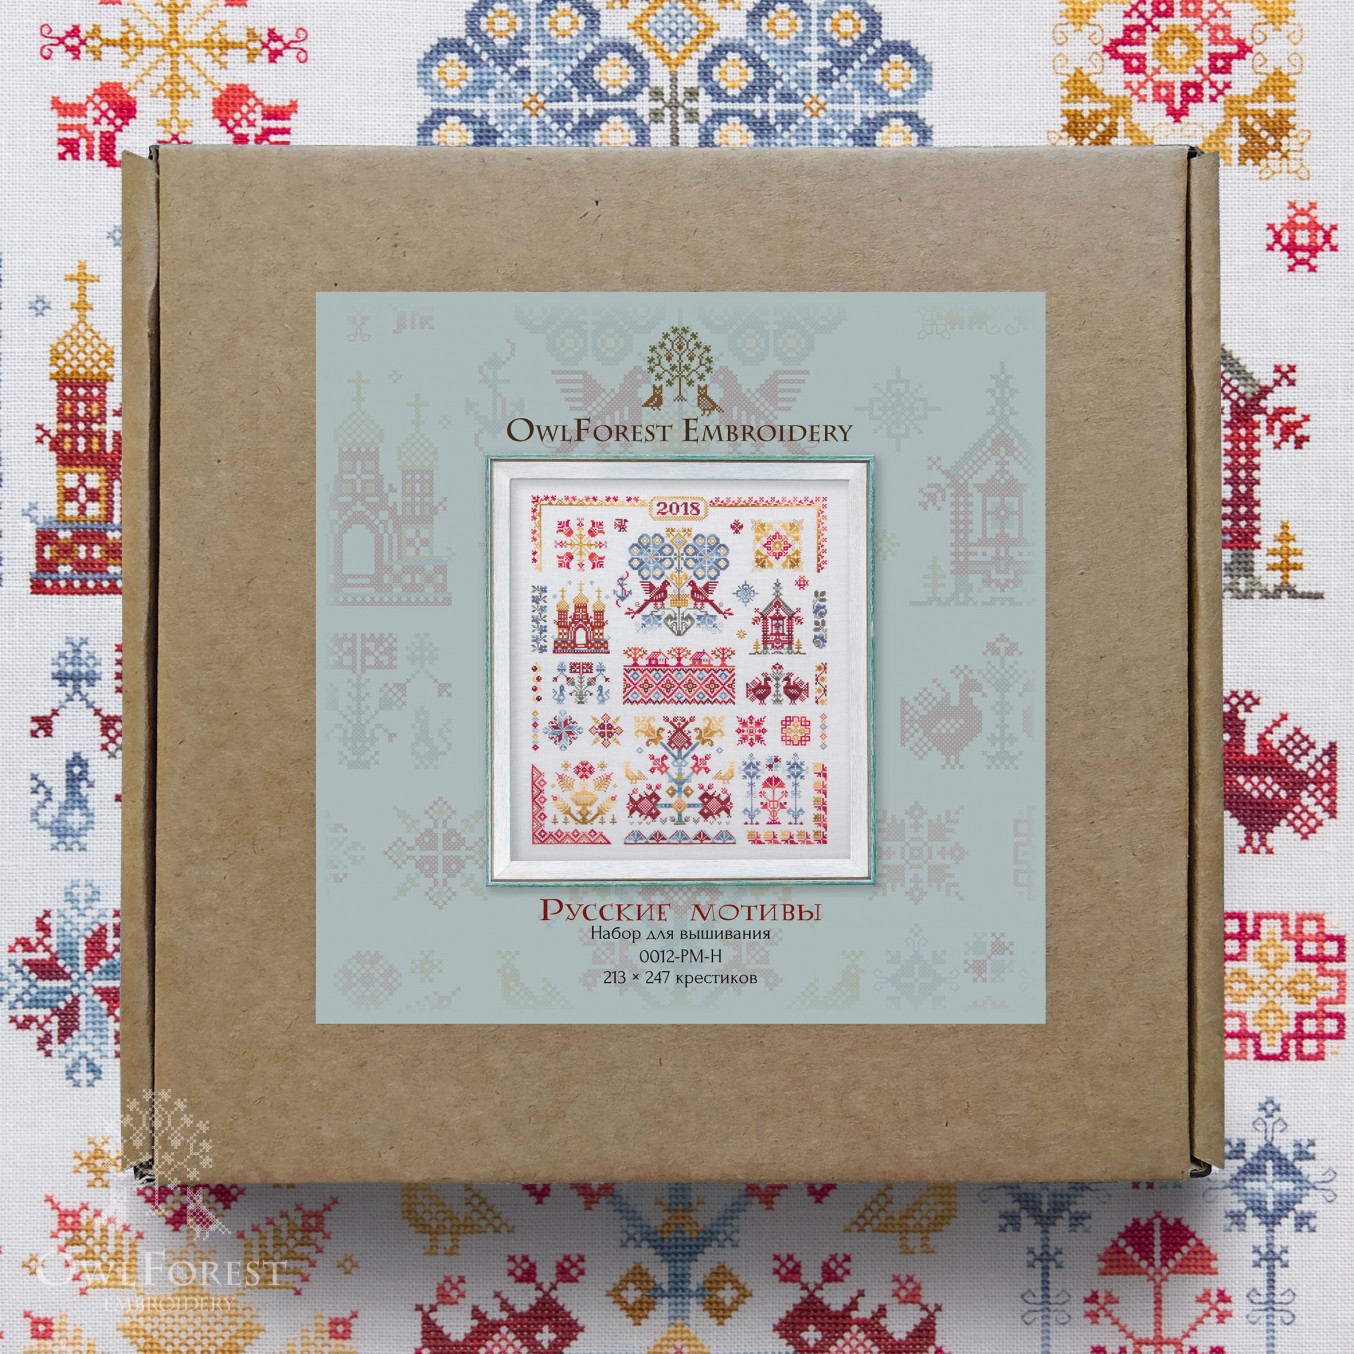 Gift New Unopened Modern Cross Stitch Embroidery Kit Nizhny Novgorod City View by Russian Manufacture MP Studio Gift Idea